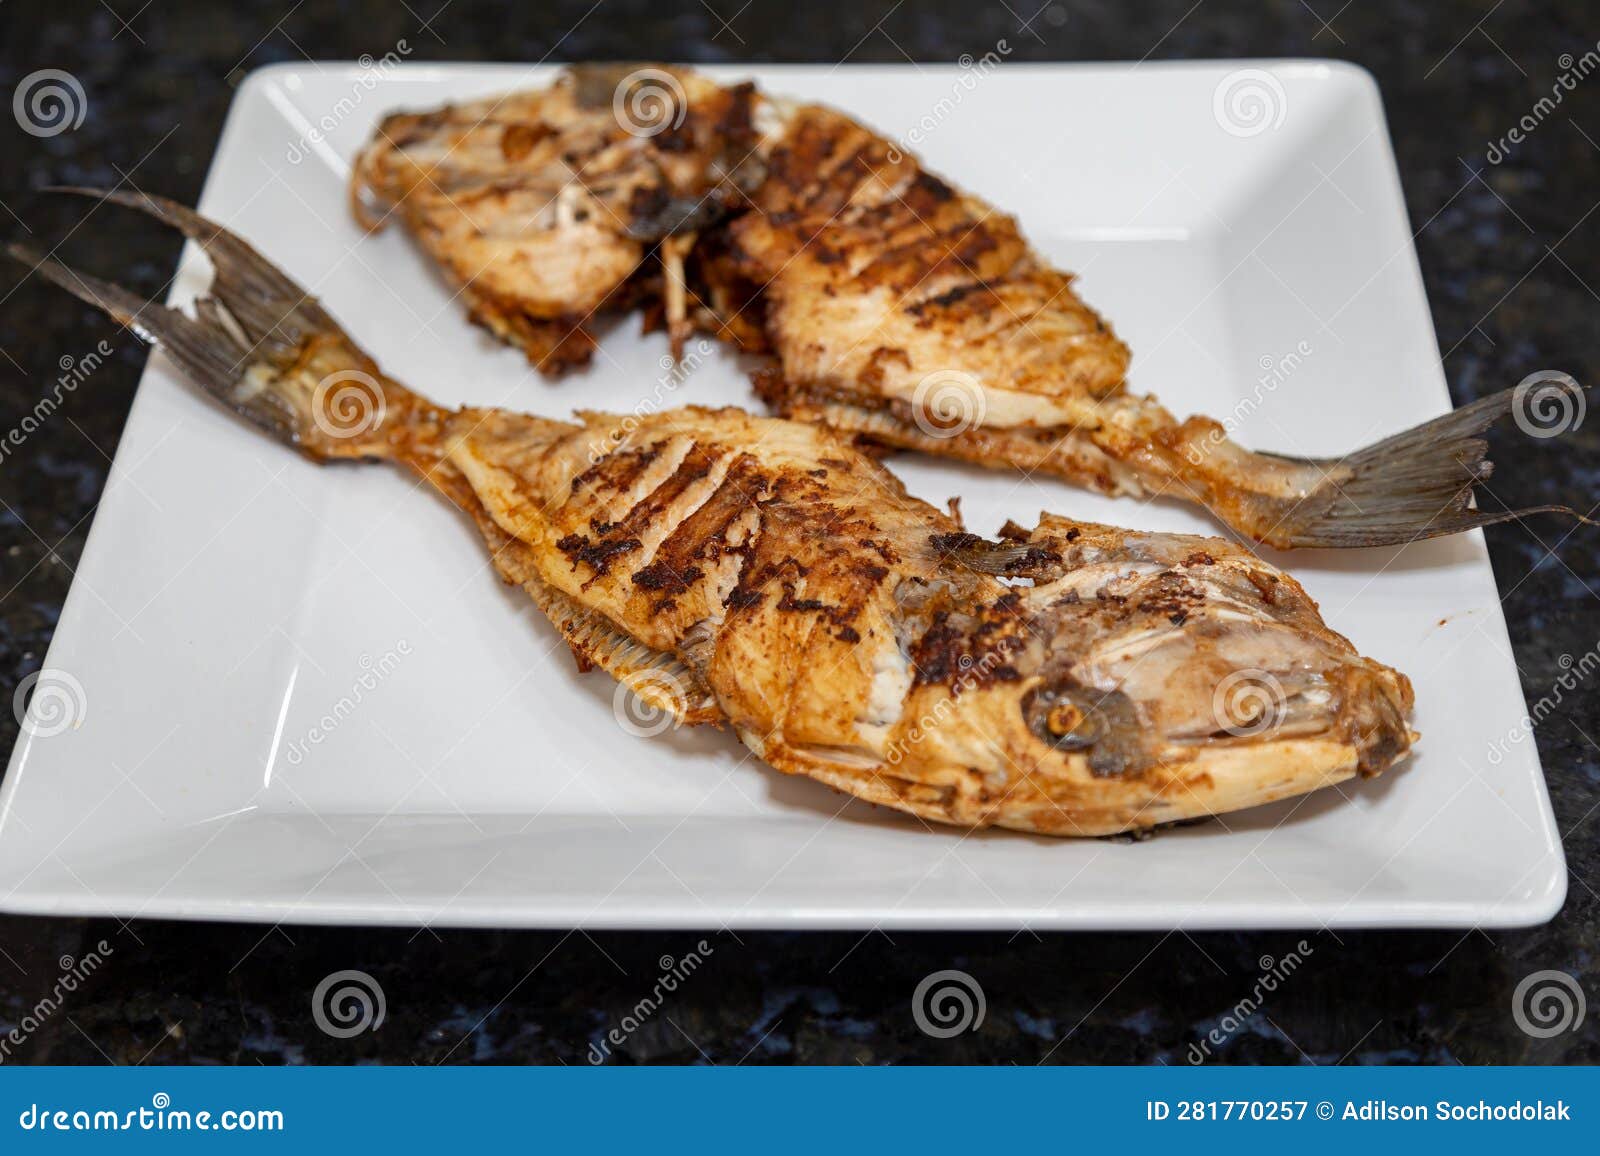 clean and seasoned peroÃ¡ fish (balistes capriscus) .